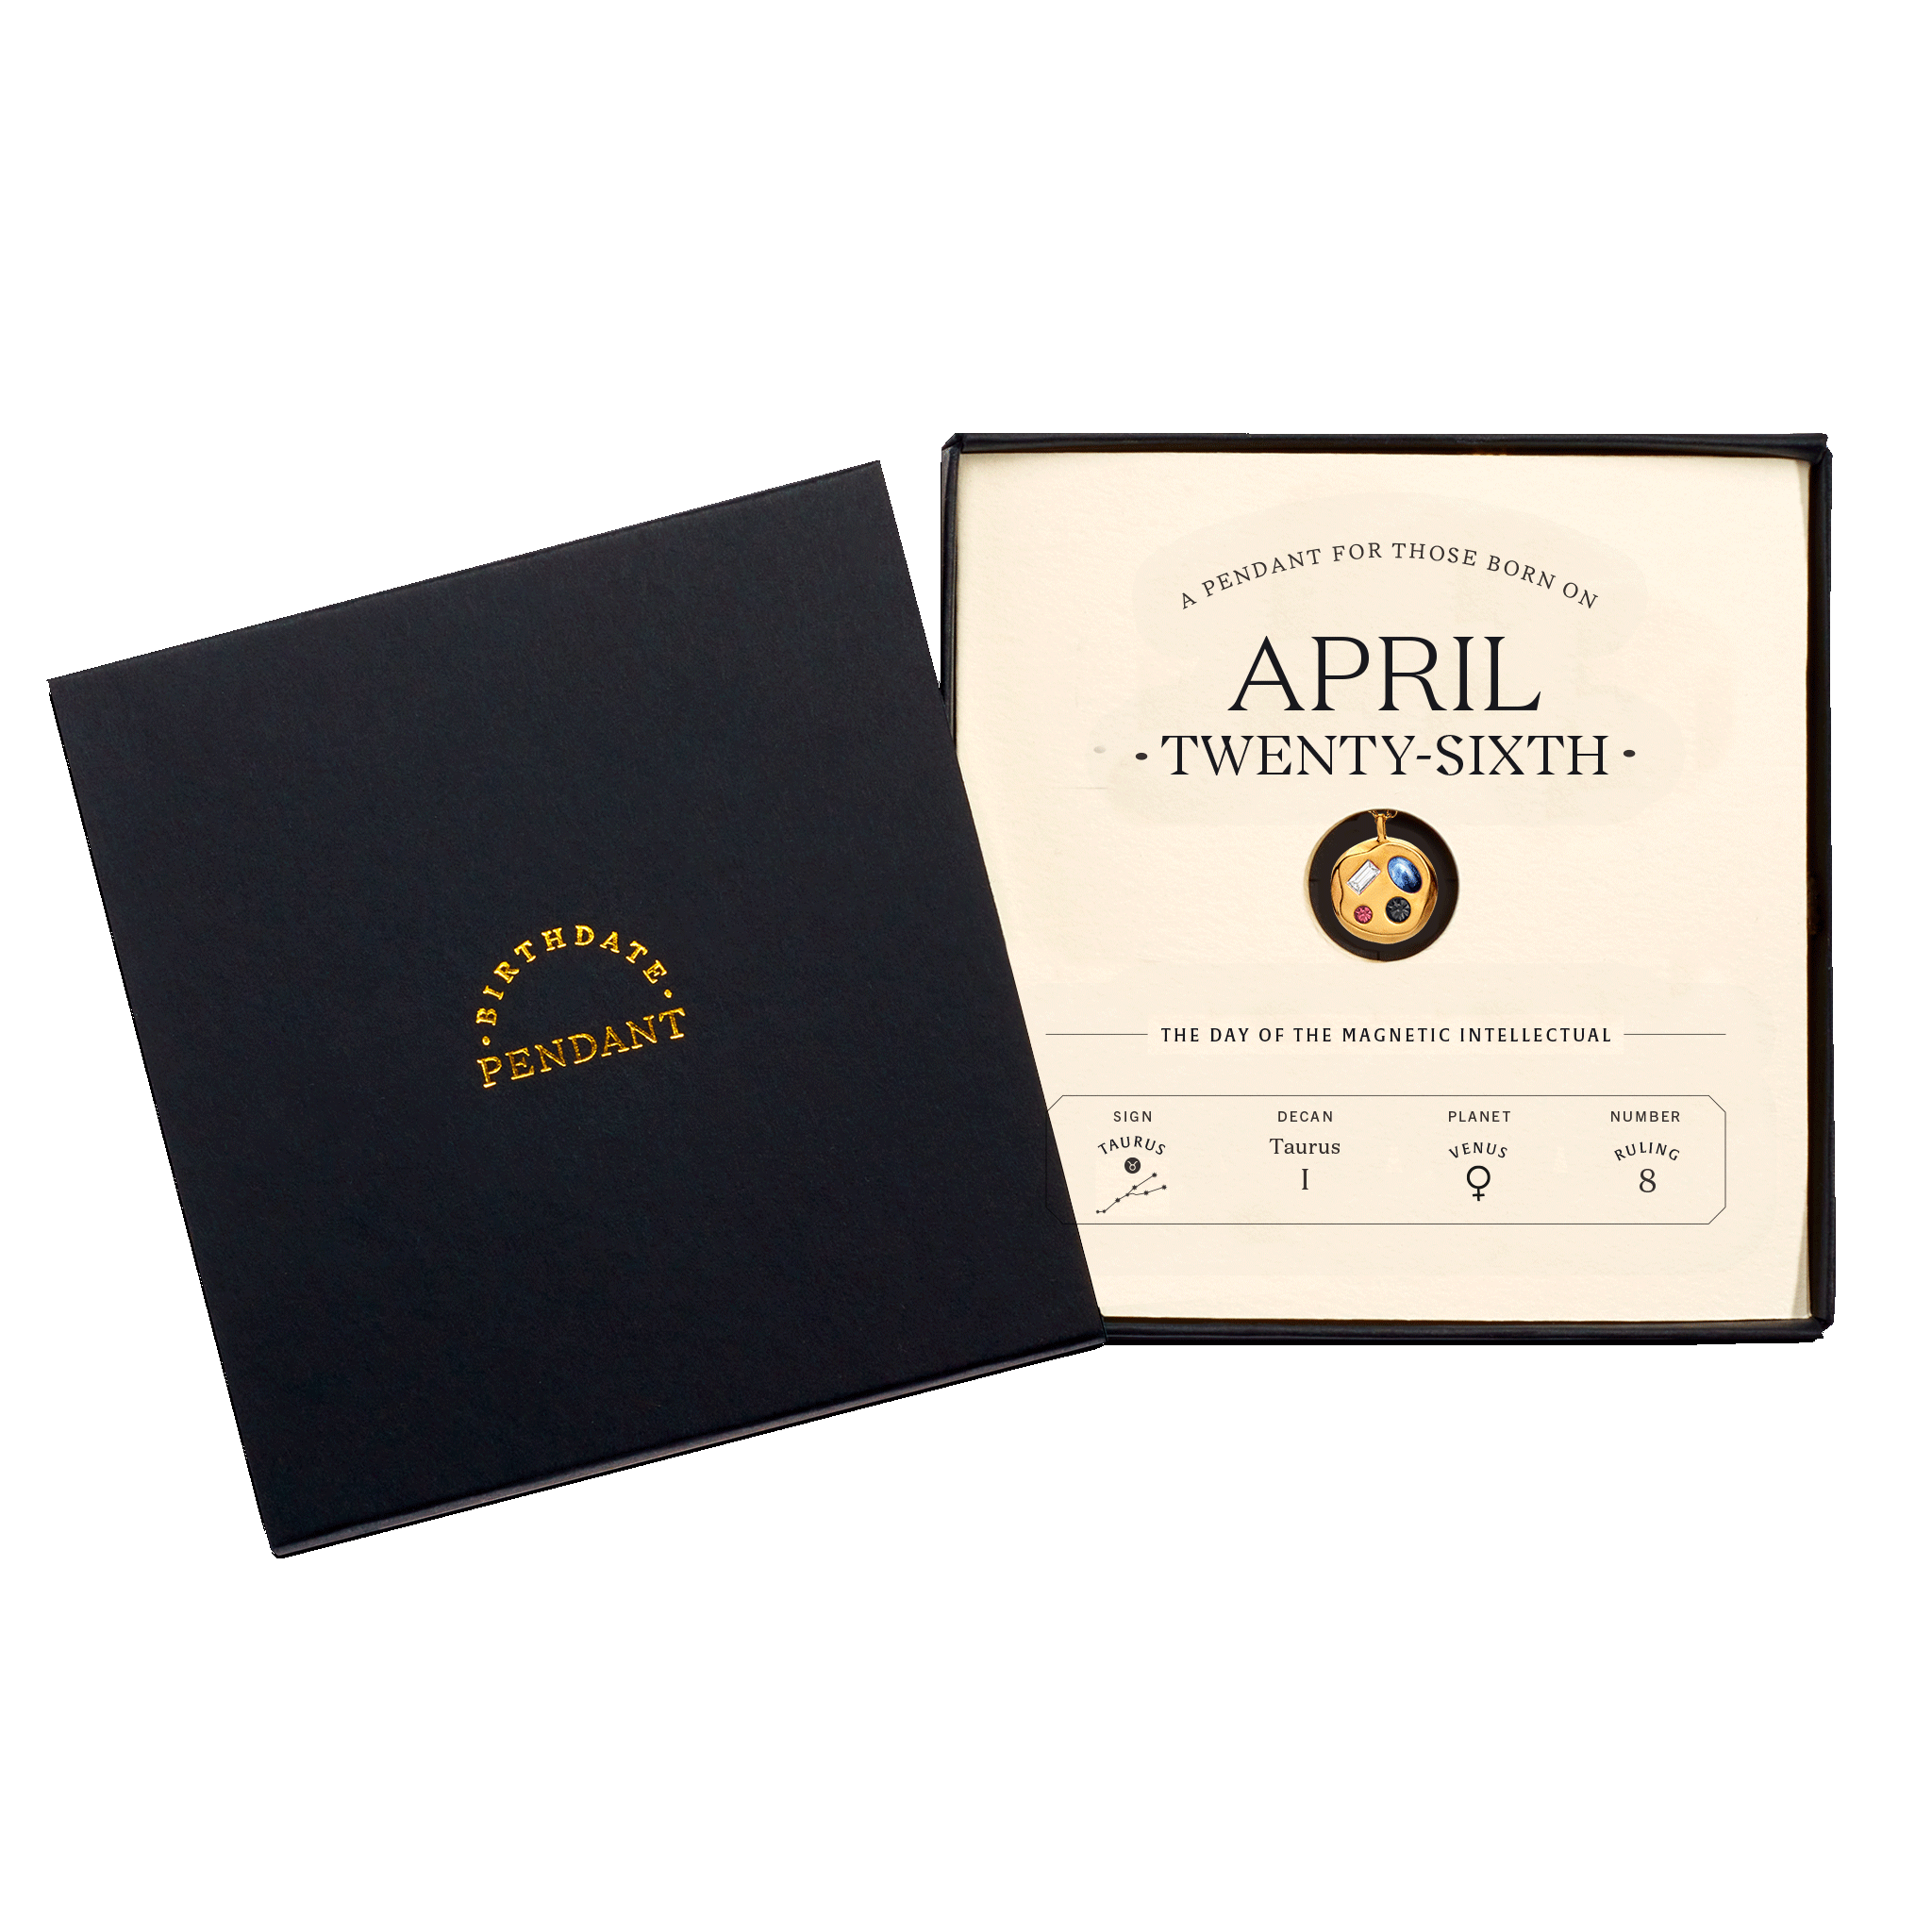 The April Twenty-Sixth Pendant inside its box